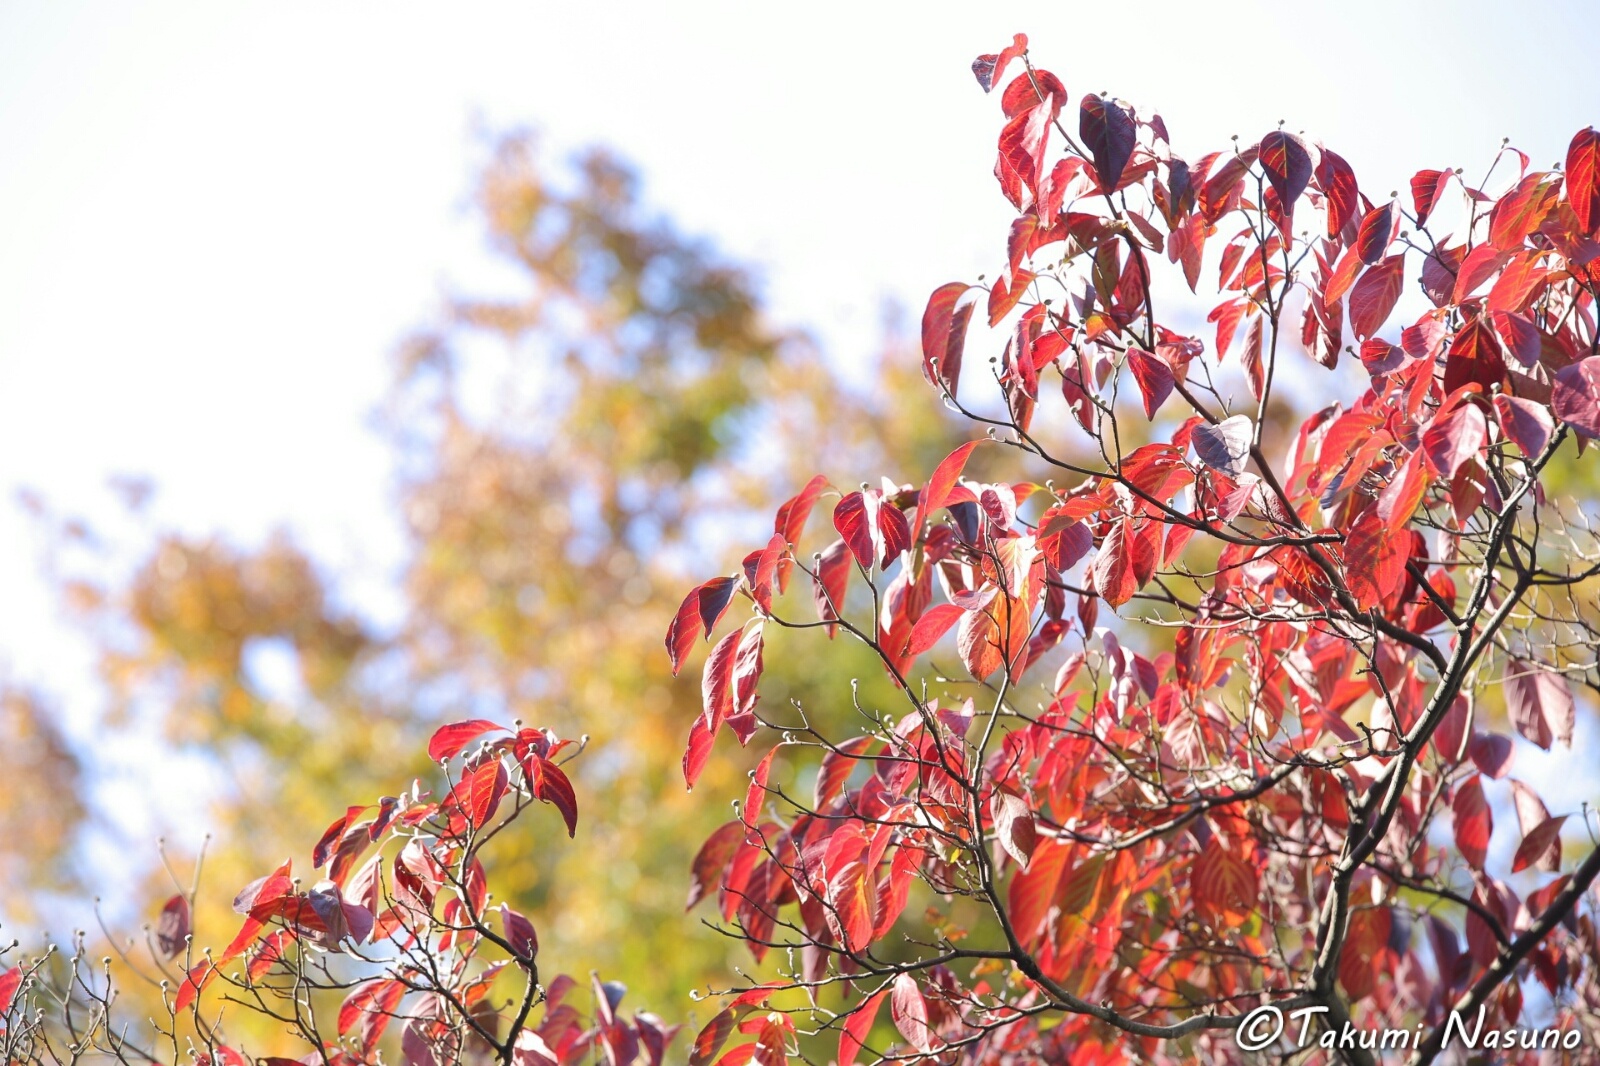 Autumn Colors of Dogwood